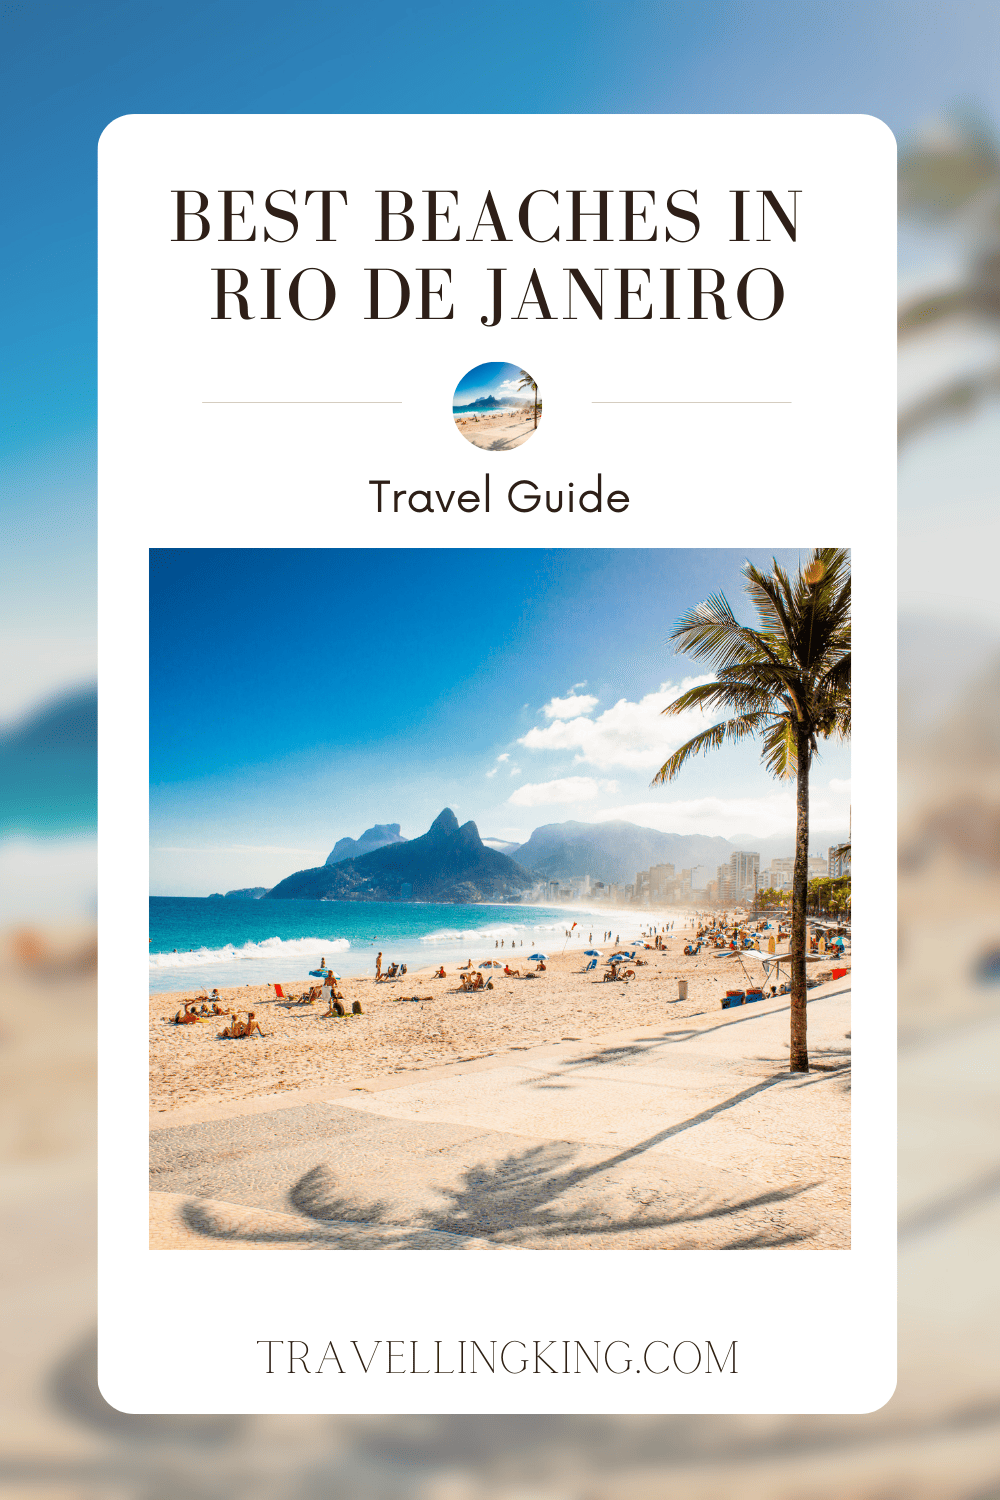 Best beaches in Rio de Janeiro